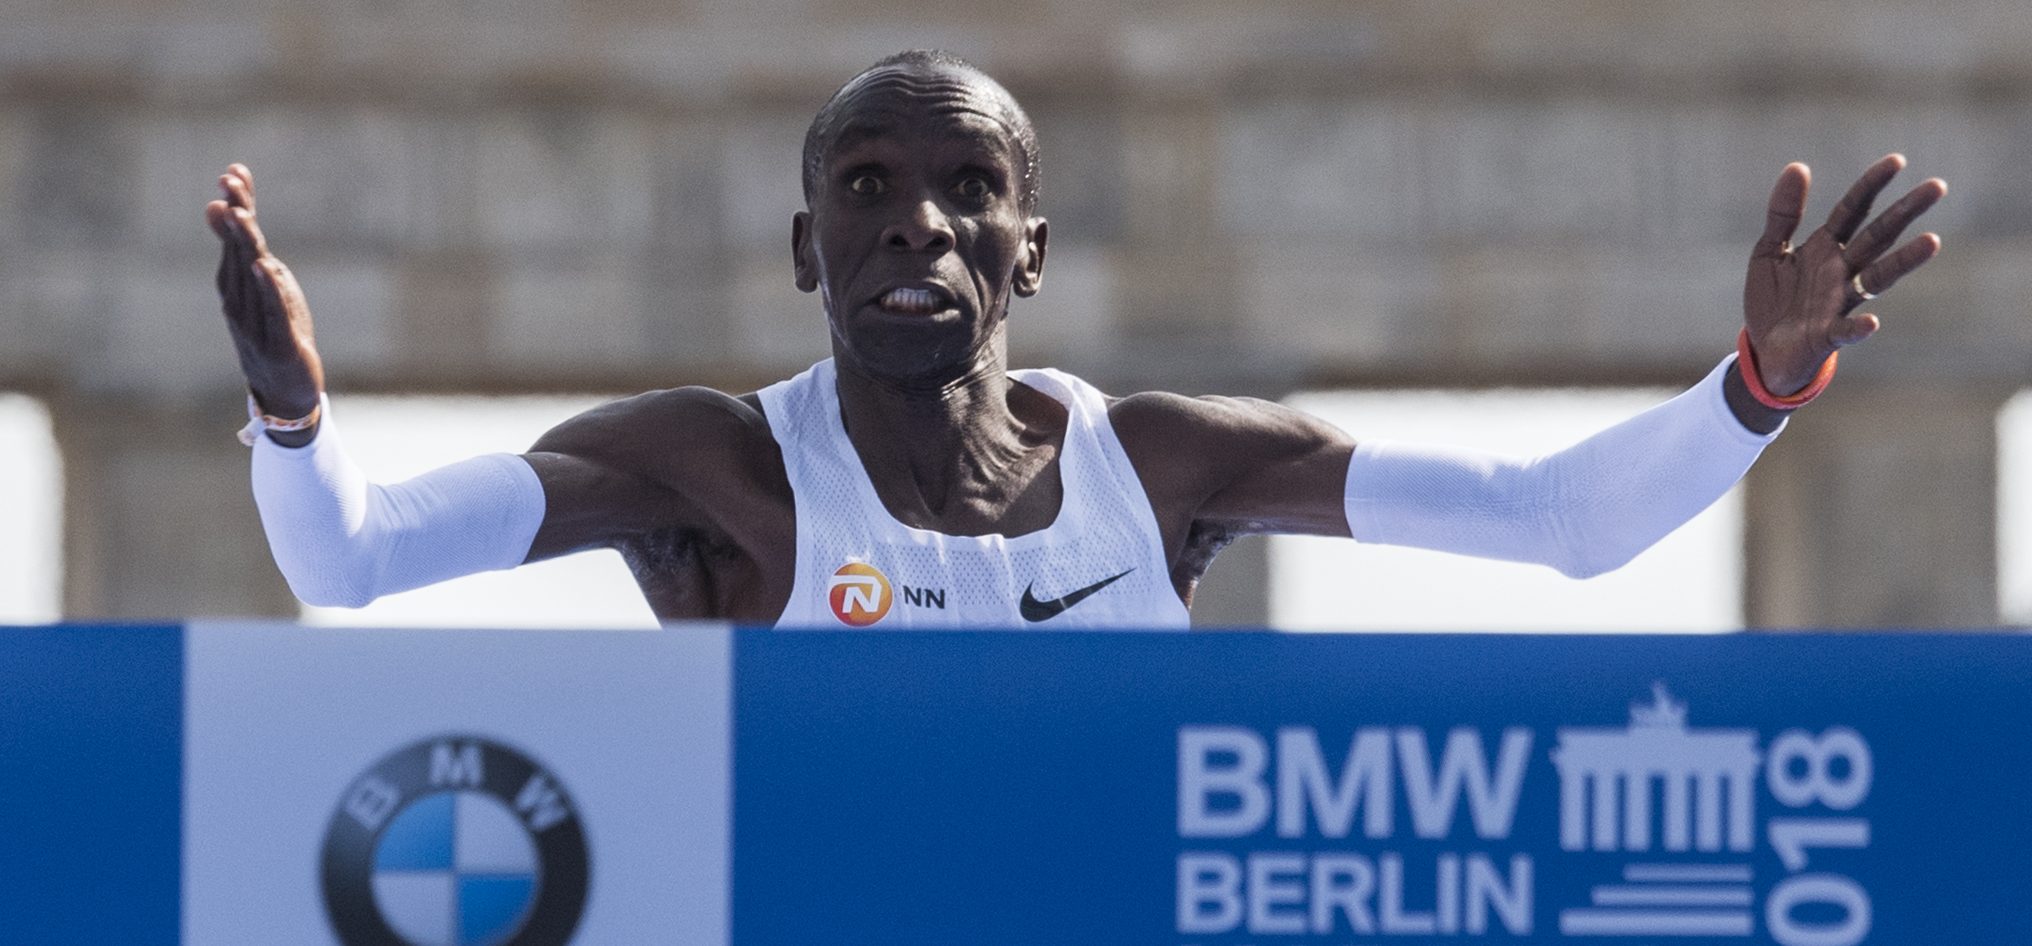 Kenya's Eliud Kipchoge sets a new marathon world record of 2:01.39 on September 16, 2018 in Berlin. (Photo credit: JOHN MACDOUGALL/AFP/Getty Images)